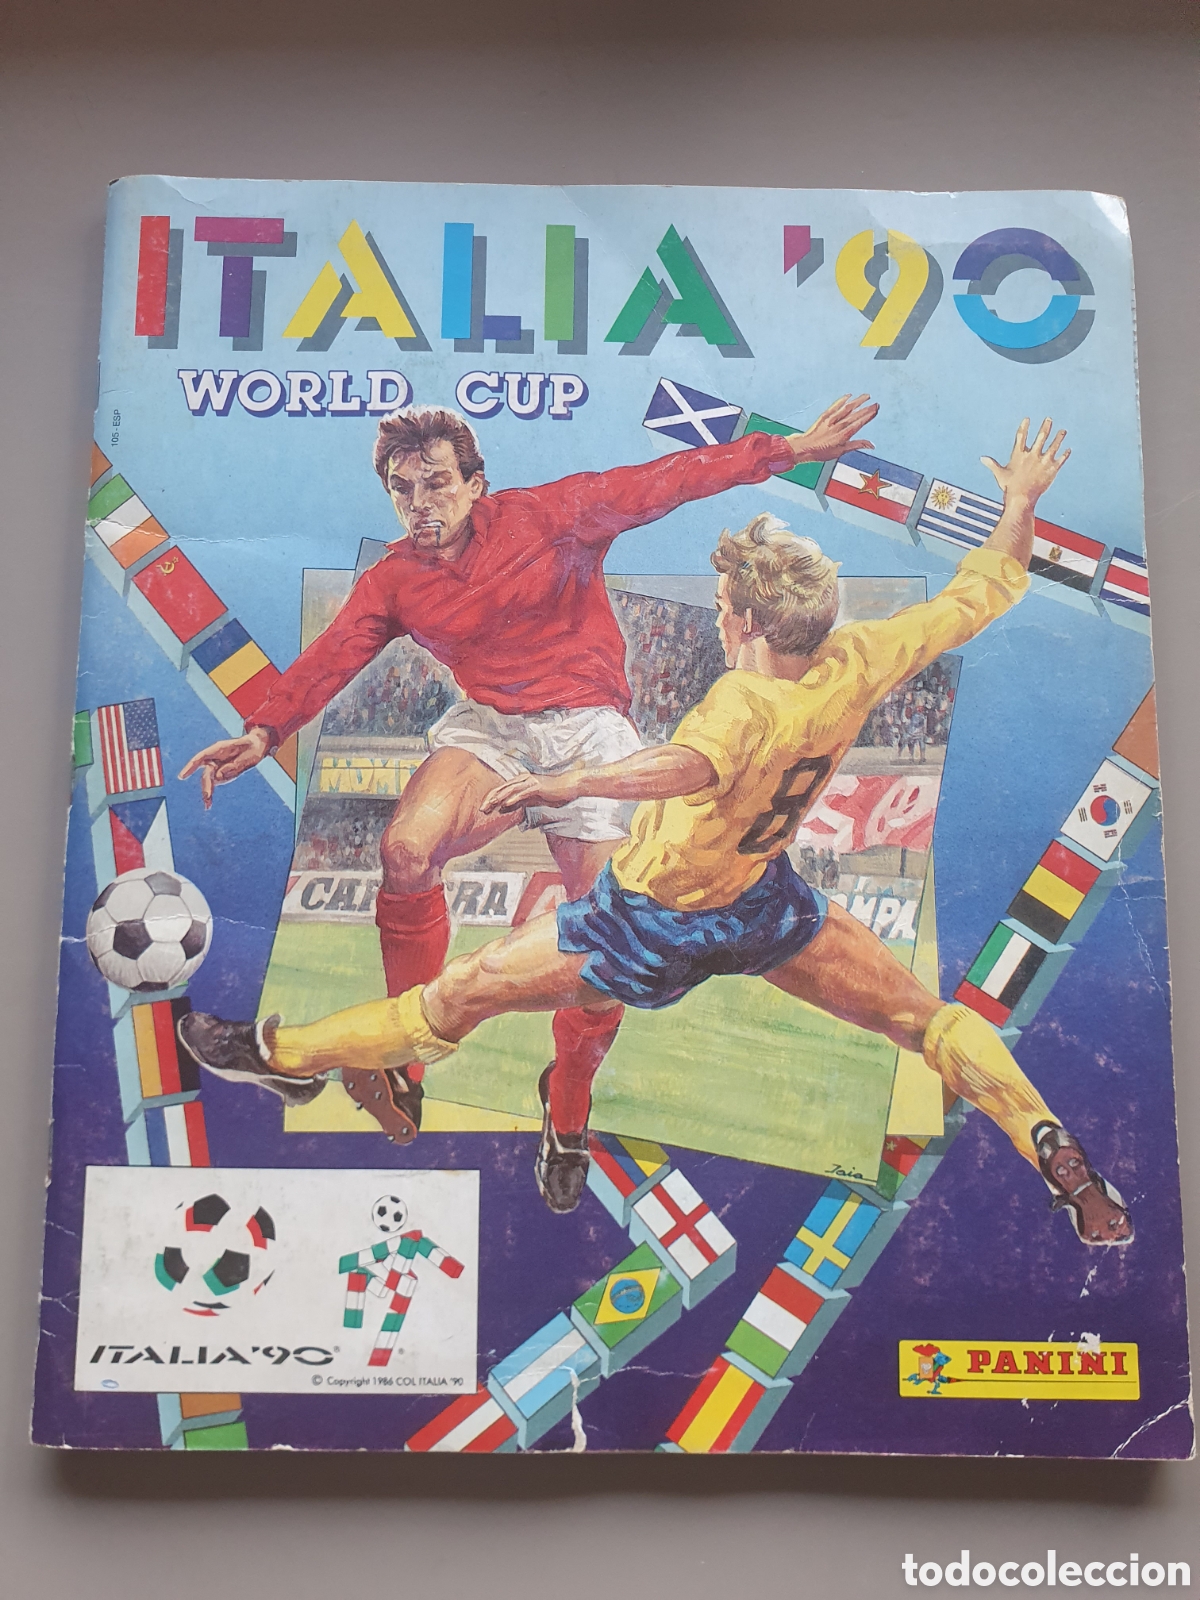 Album Panini 1986 football complet - Disponible sur